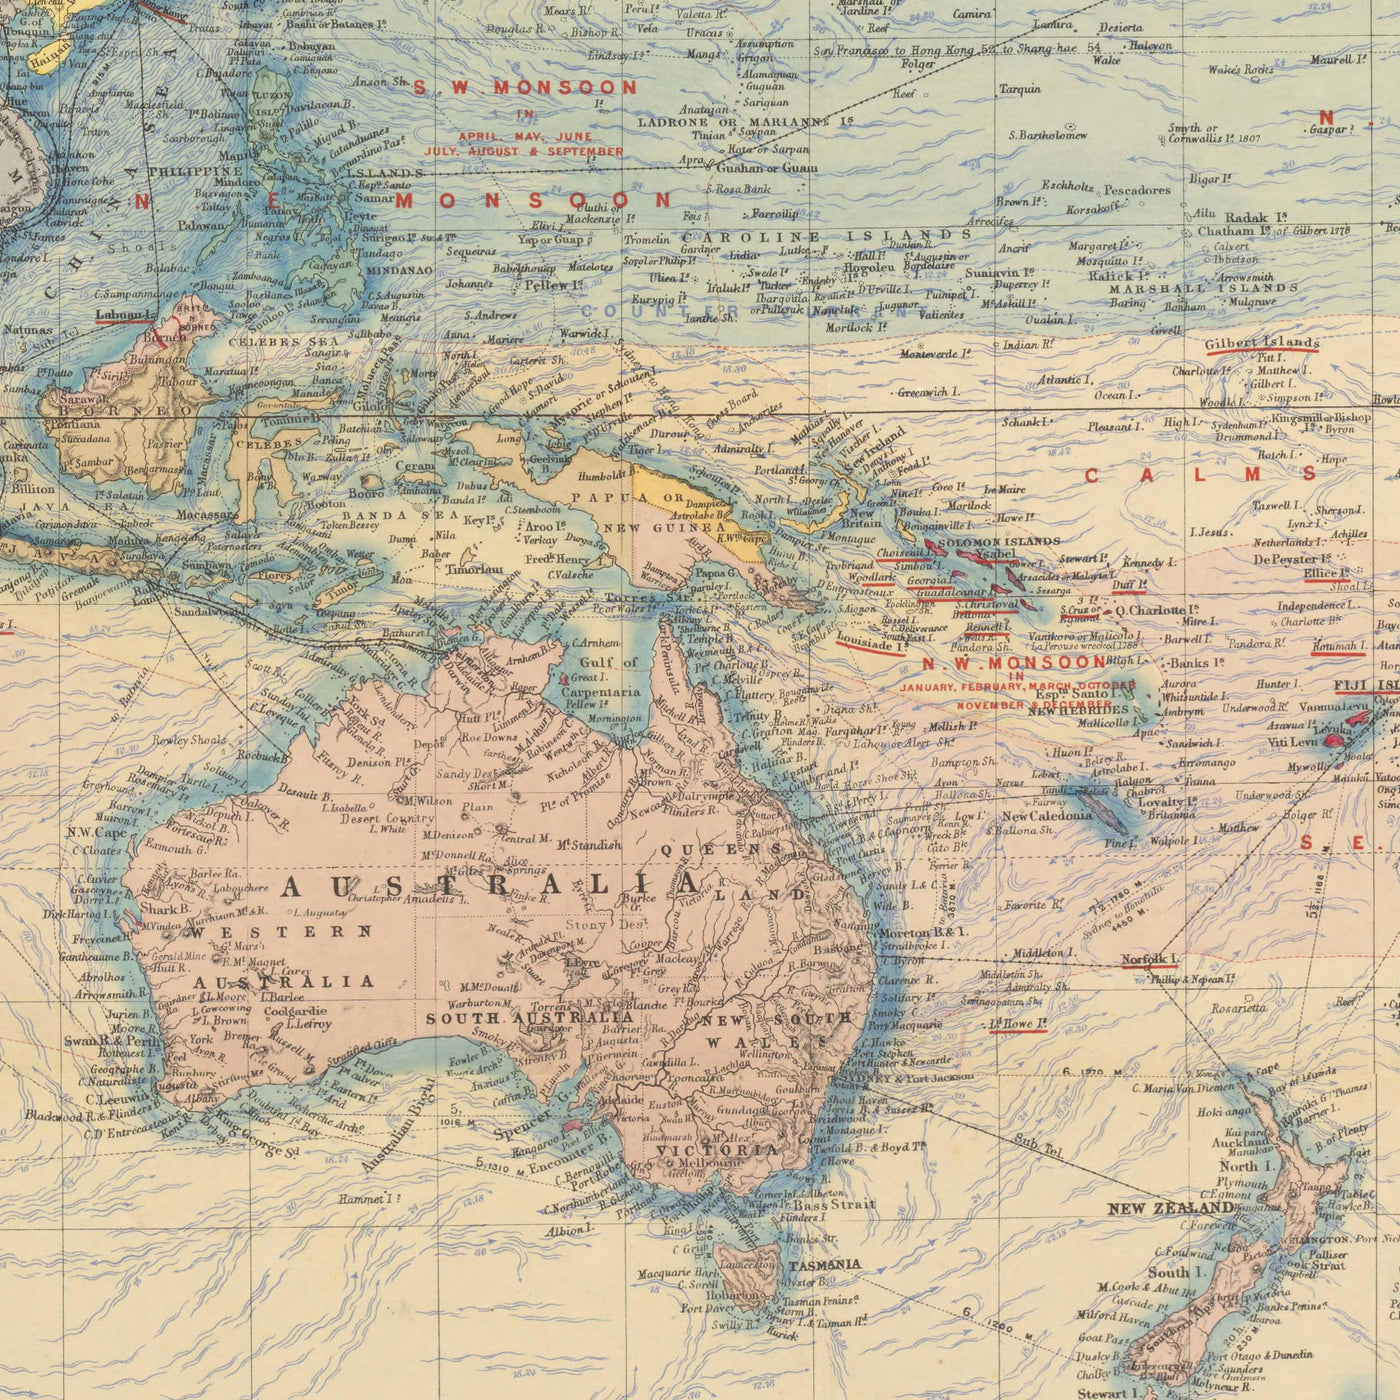 Mapa del viejo mundo por Edward Stanford, 1898 - Masterpiece Vintage Atlas Wall Chart